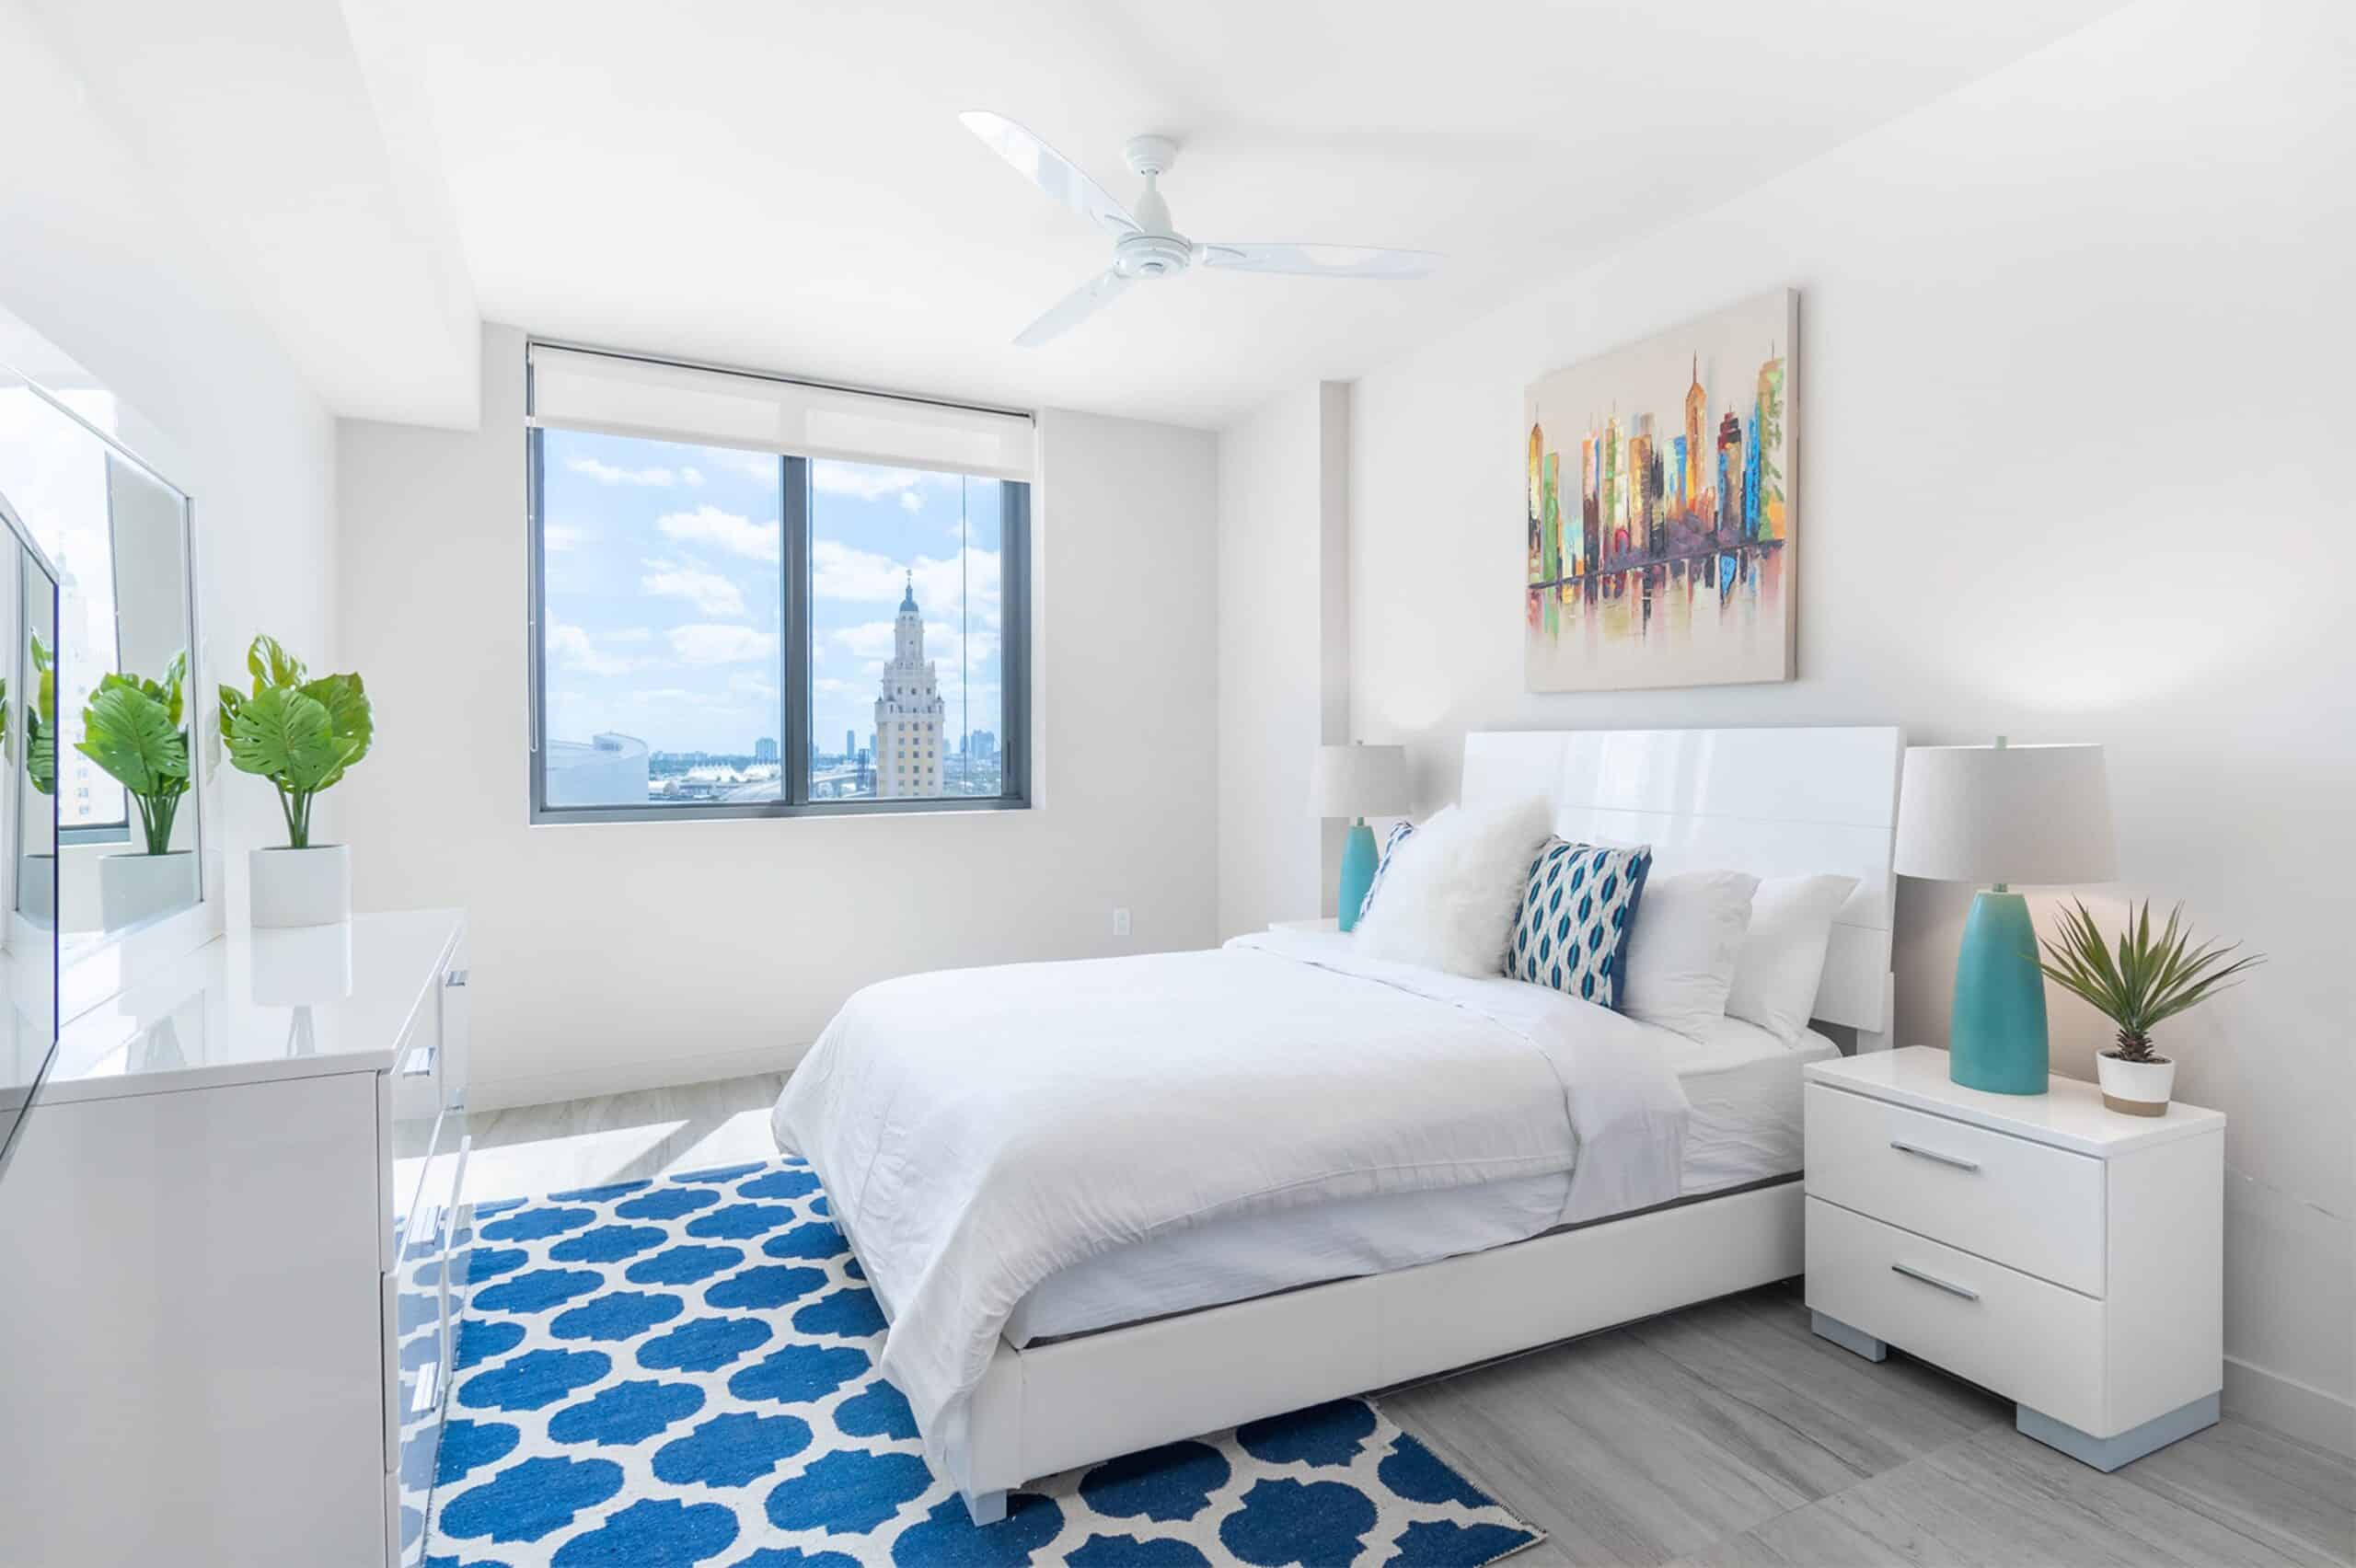 Caoba Miami Worldcenter Apartments For Rent in Miami, FL